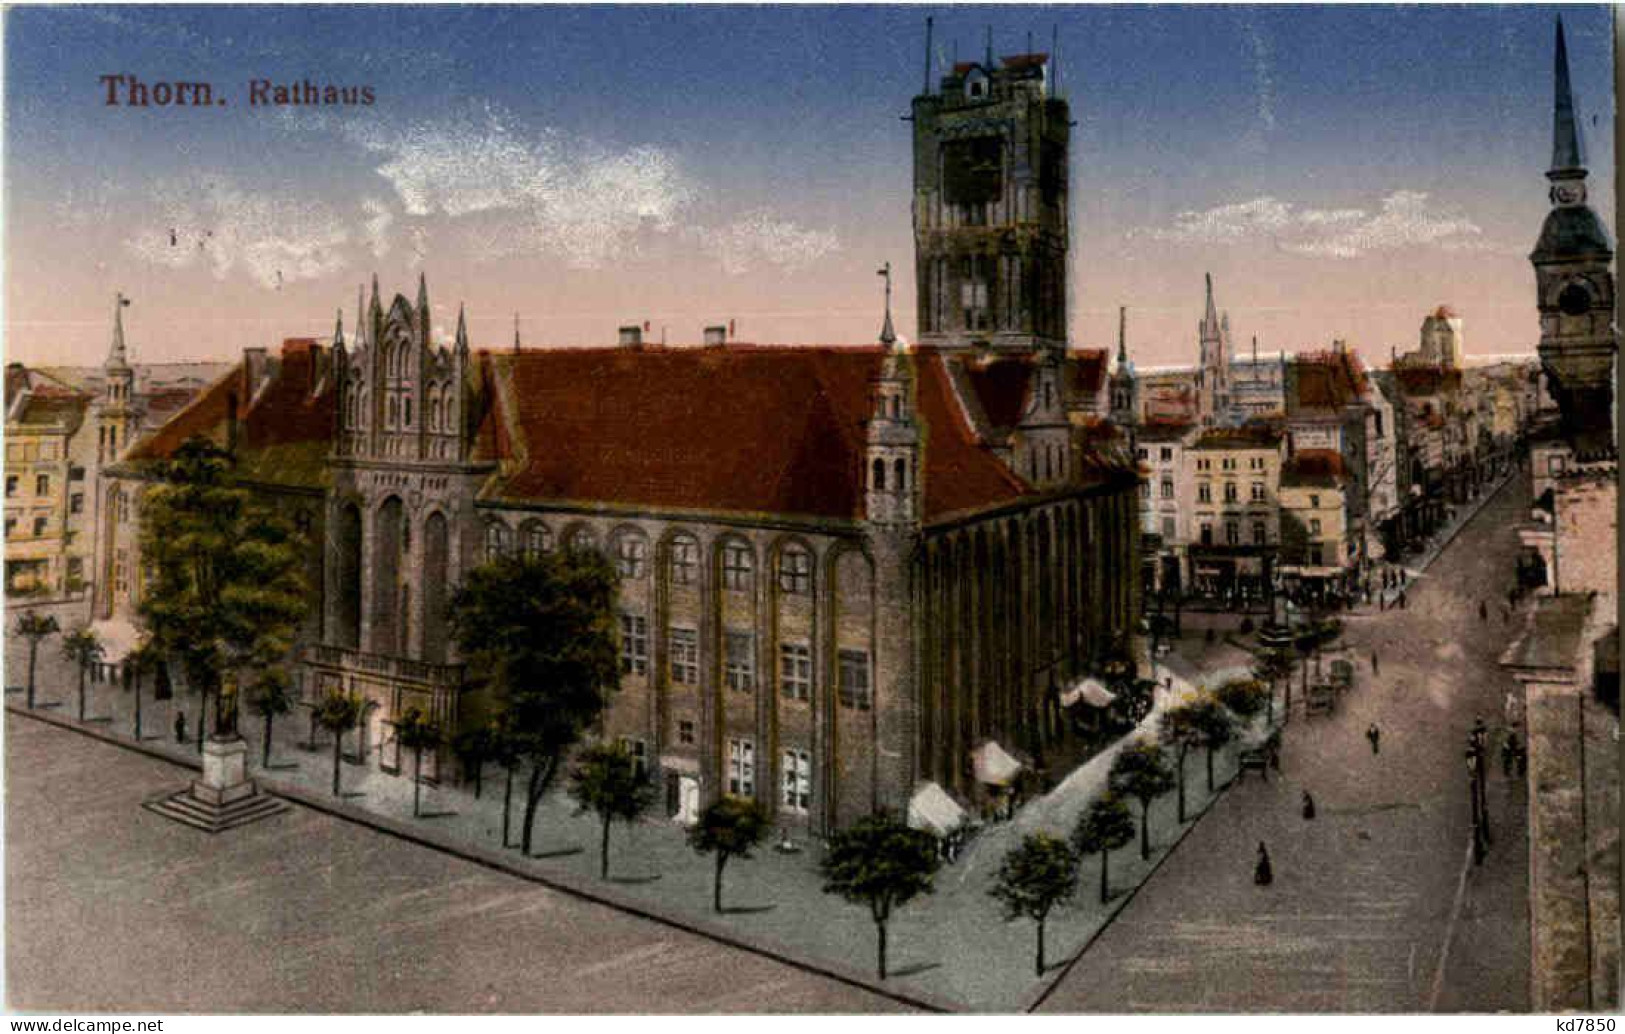 Thorn - Rathaus - Pommern